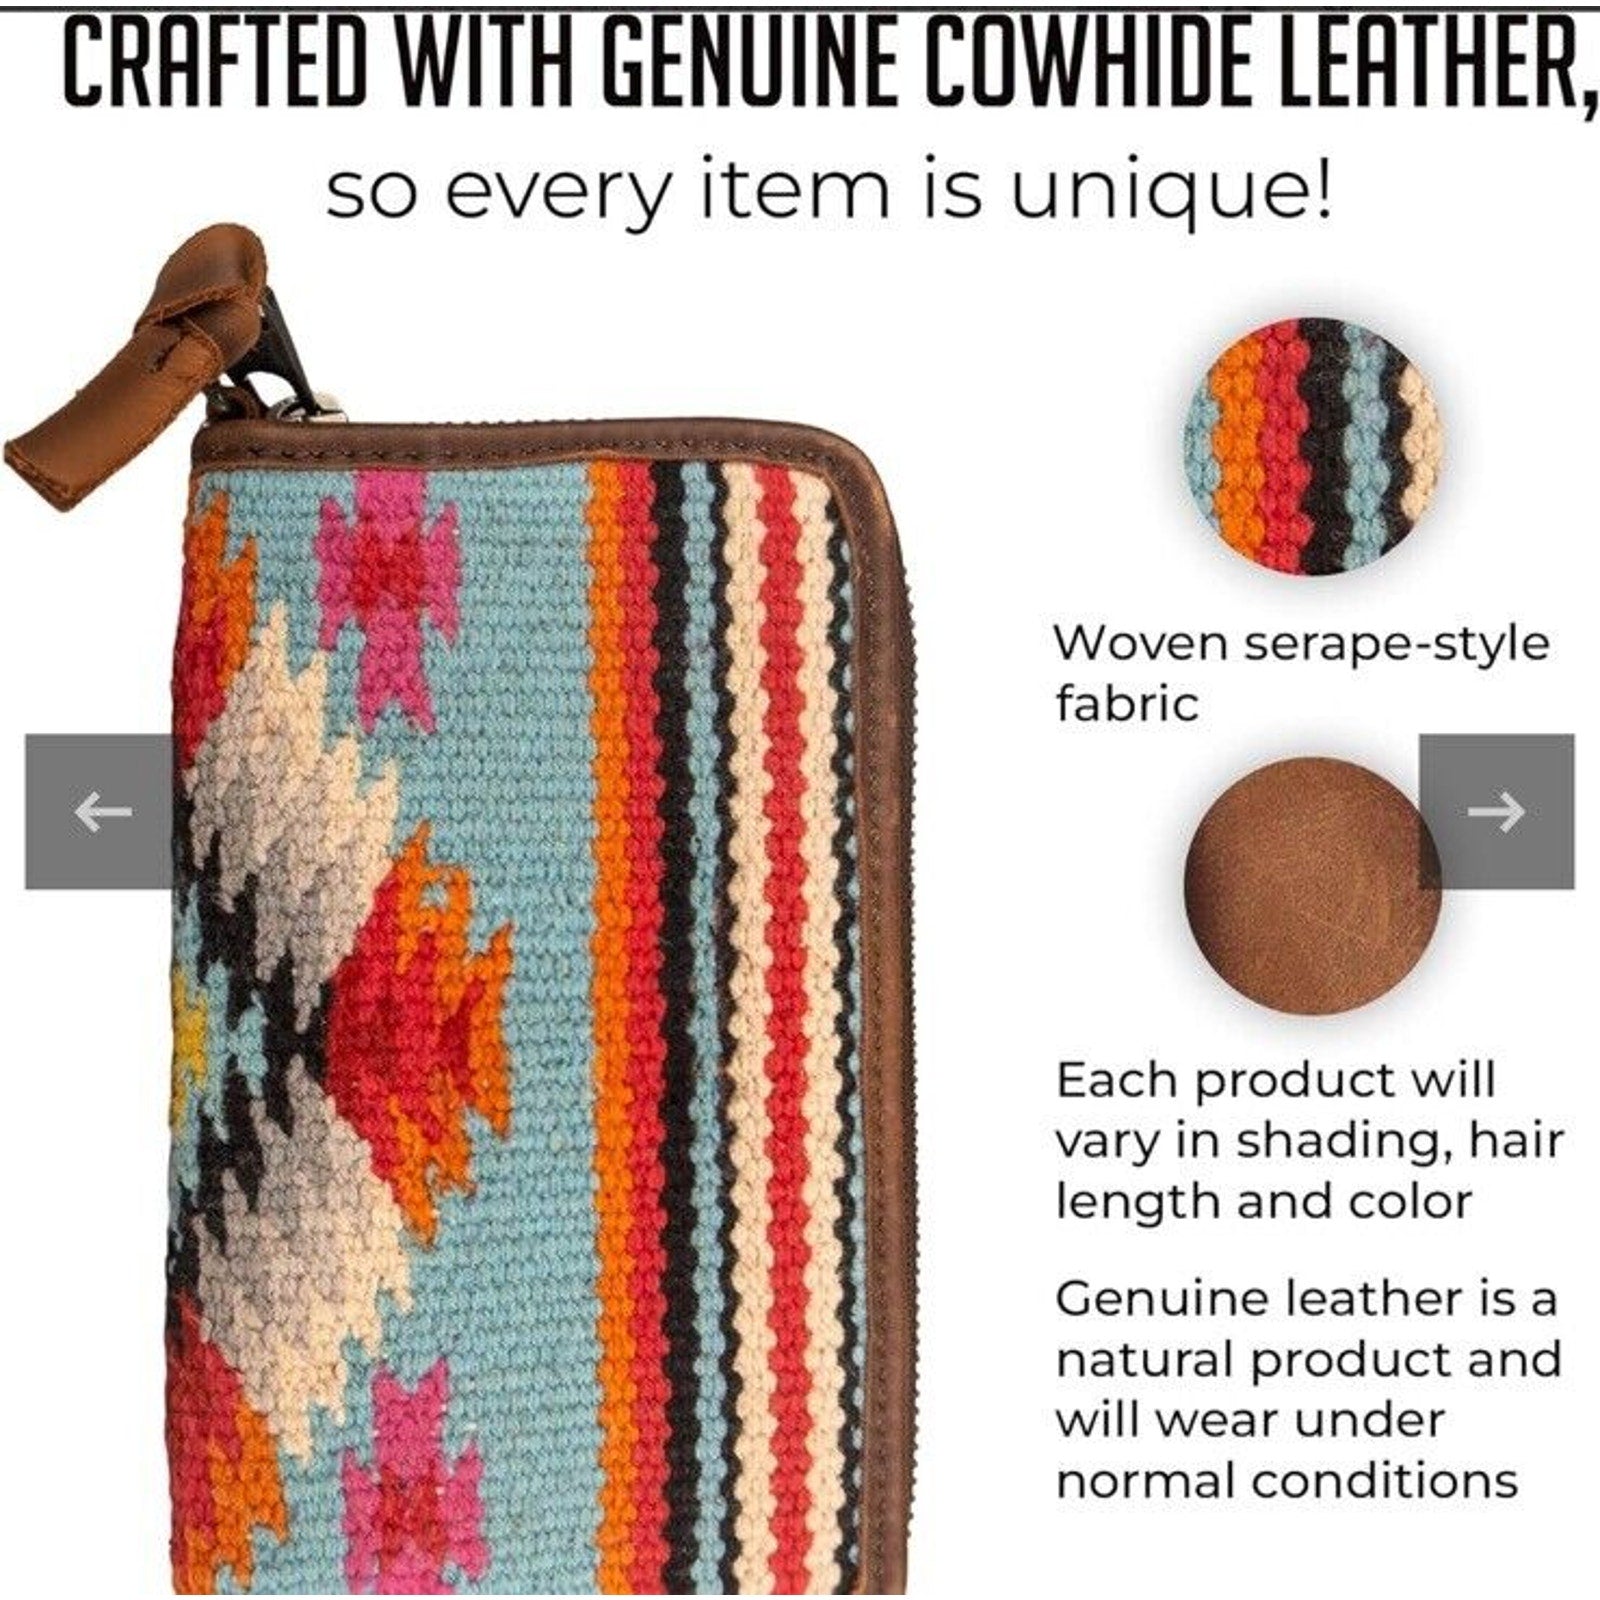 STS Ranchwear Saltillo Rosa Wristlet Wallet Woven Fabric Western Leather Zip